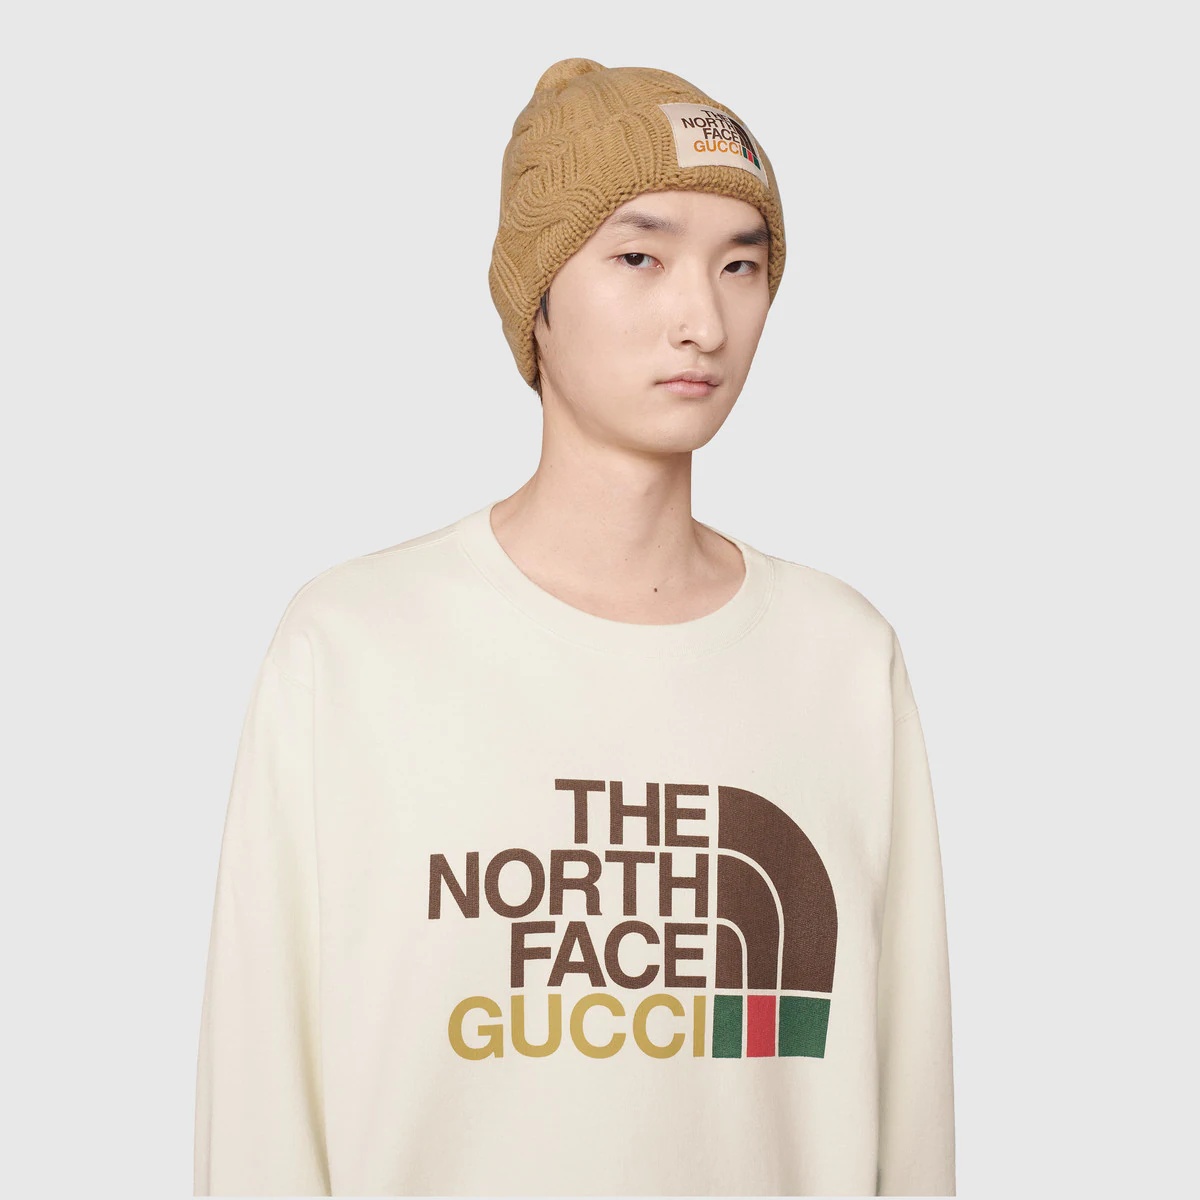 The North Face x Gucci cotton sweatshirt - 5